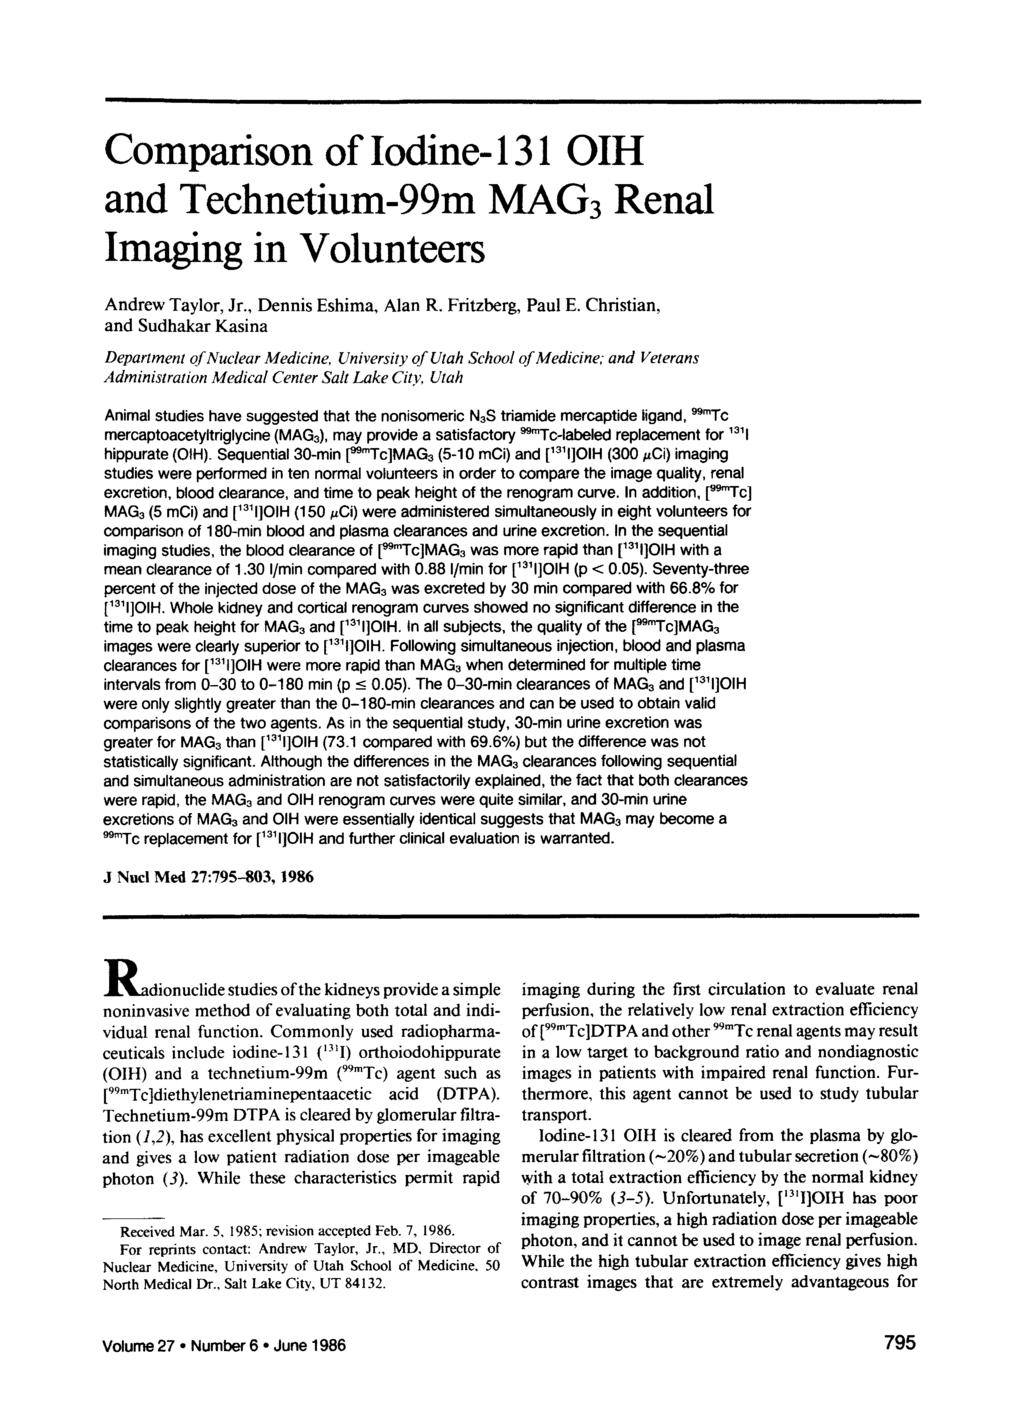 Comparison of Iodine-131 and Technetium-99m enal Imaging in Volunteers Andrew Taylor, Jr., Dennis Eshima, Alan. Fritzberg, Paul E.